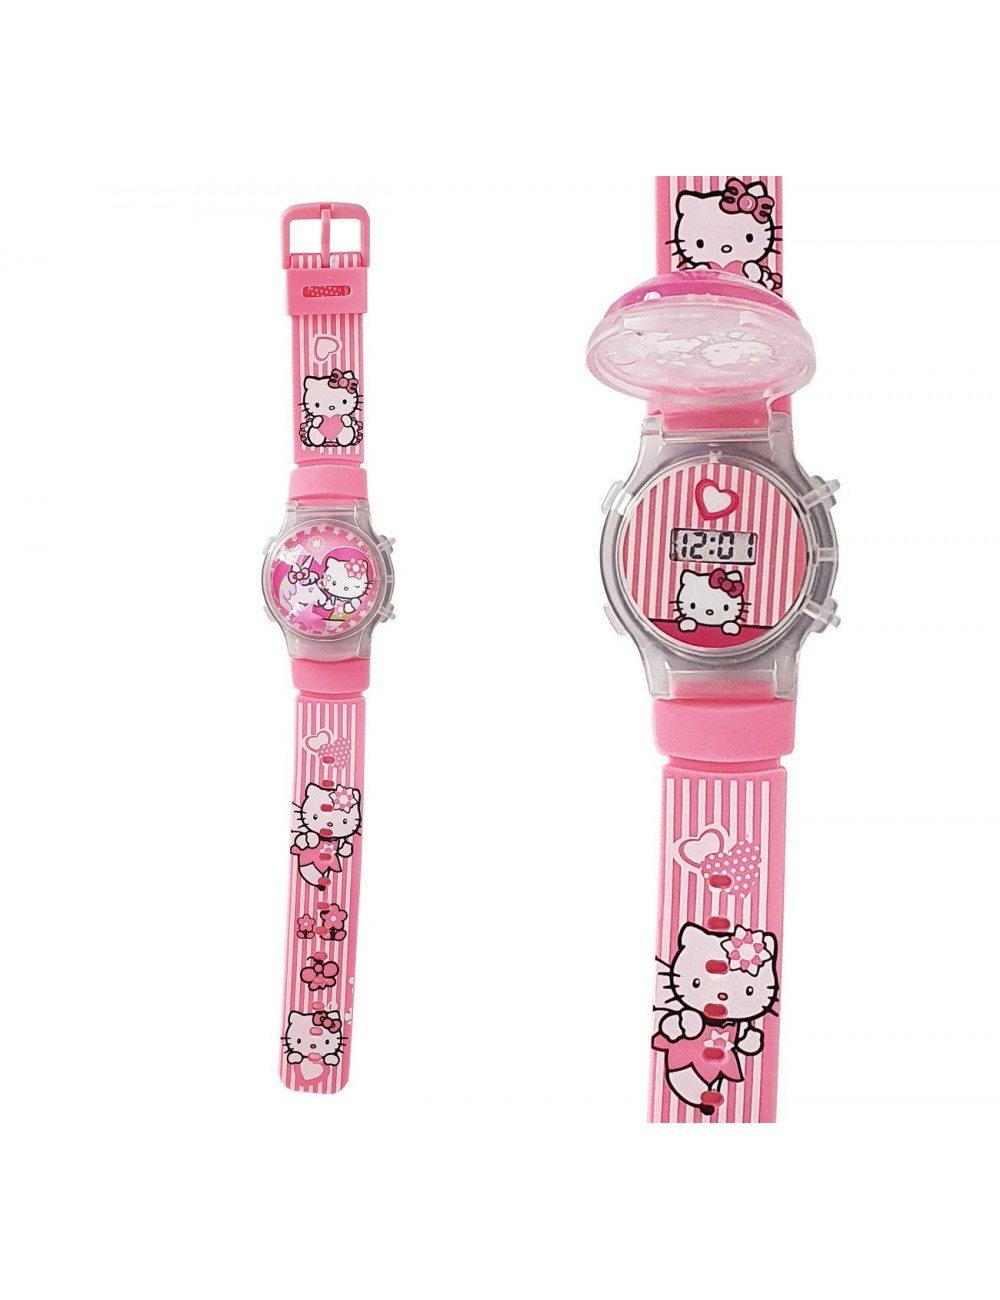 Reloj Hello Kitty 17,900.00